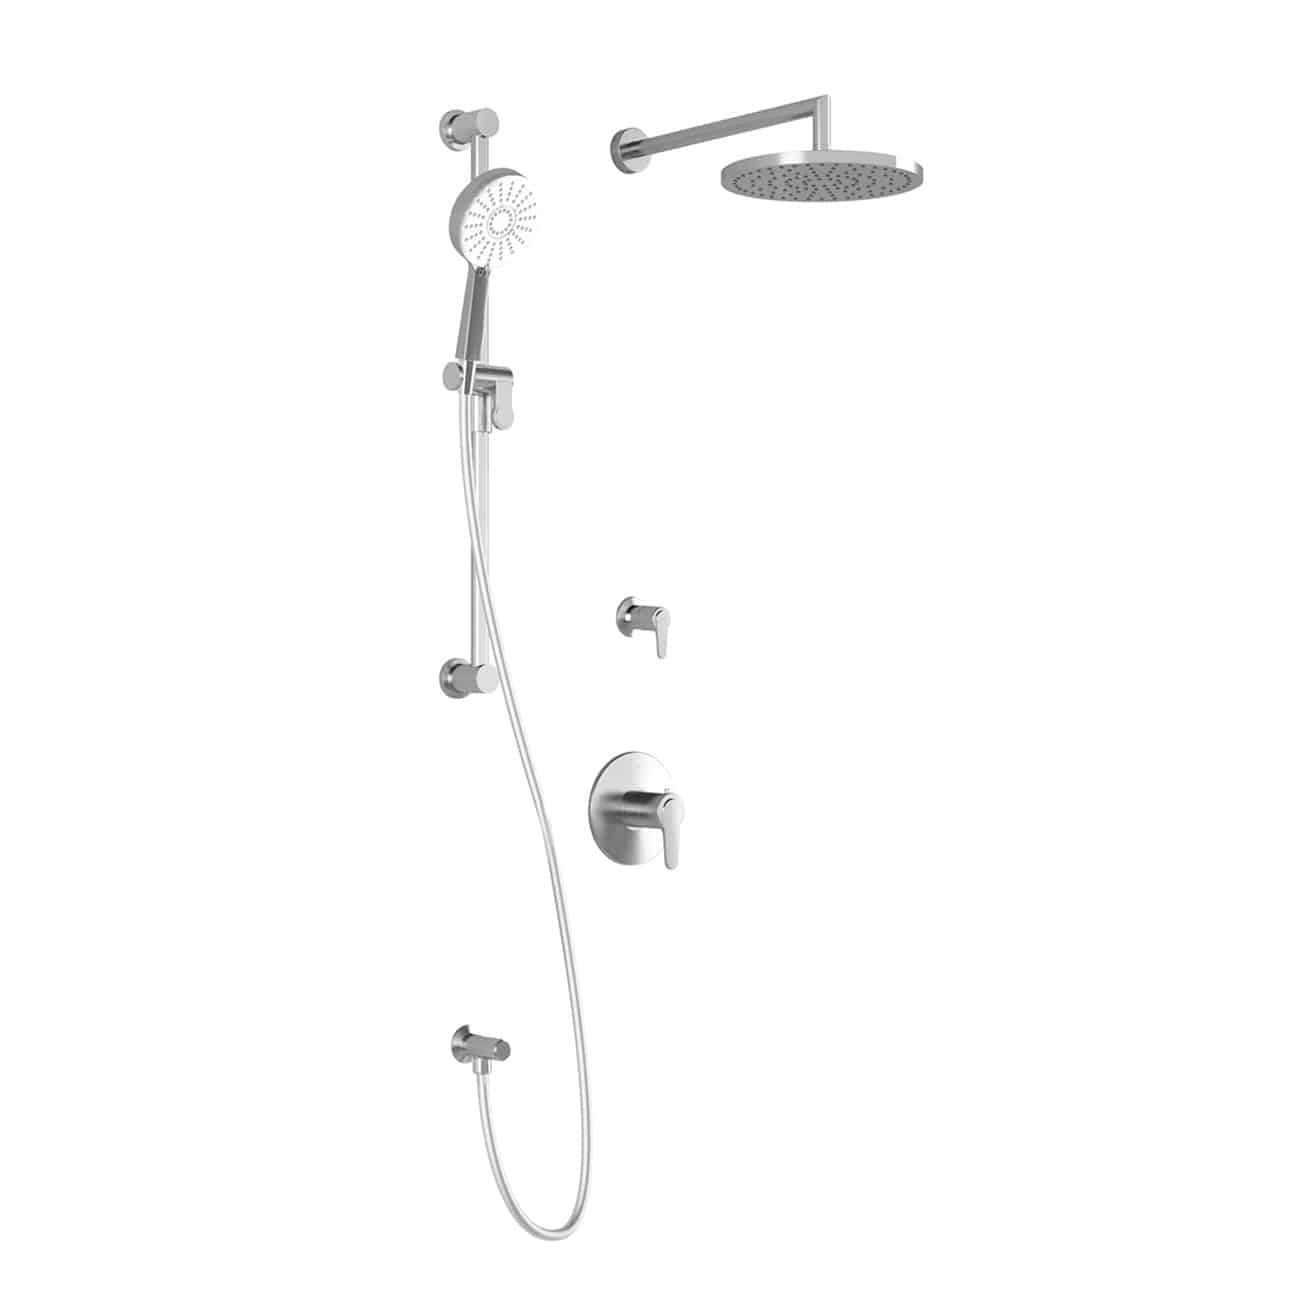 Kalia KONTOUR T2 PLUS AQUATONIK T/P Shower System with Wall Arm and 10" Round Rain Shower Head- Chrome